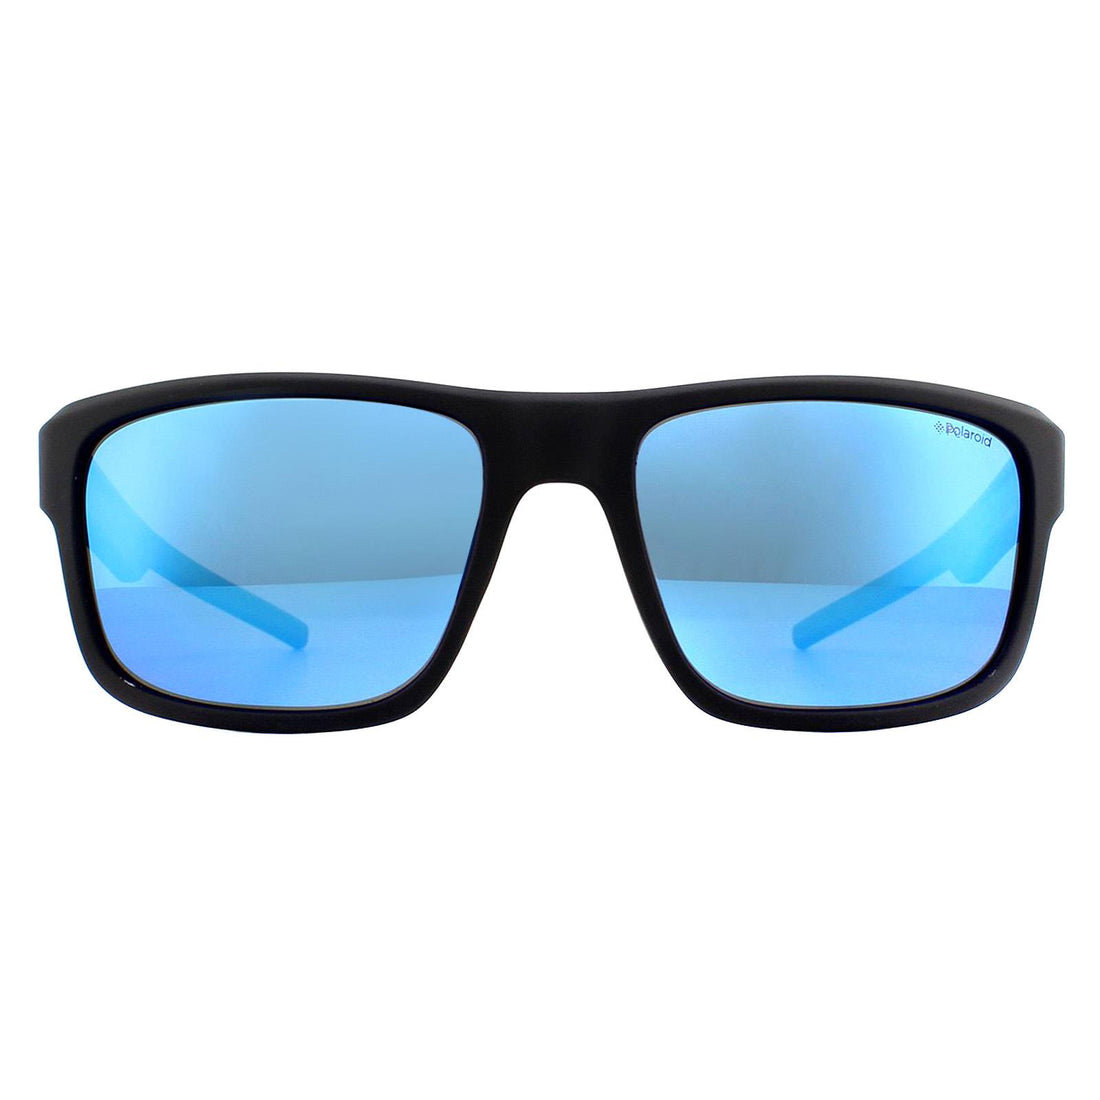 Polaroid PLD 3018/S Sunglasses Matte Black / Grey Blue Mirror Polarized